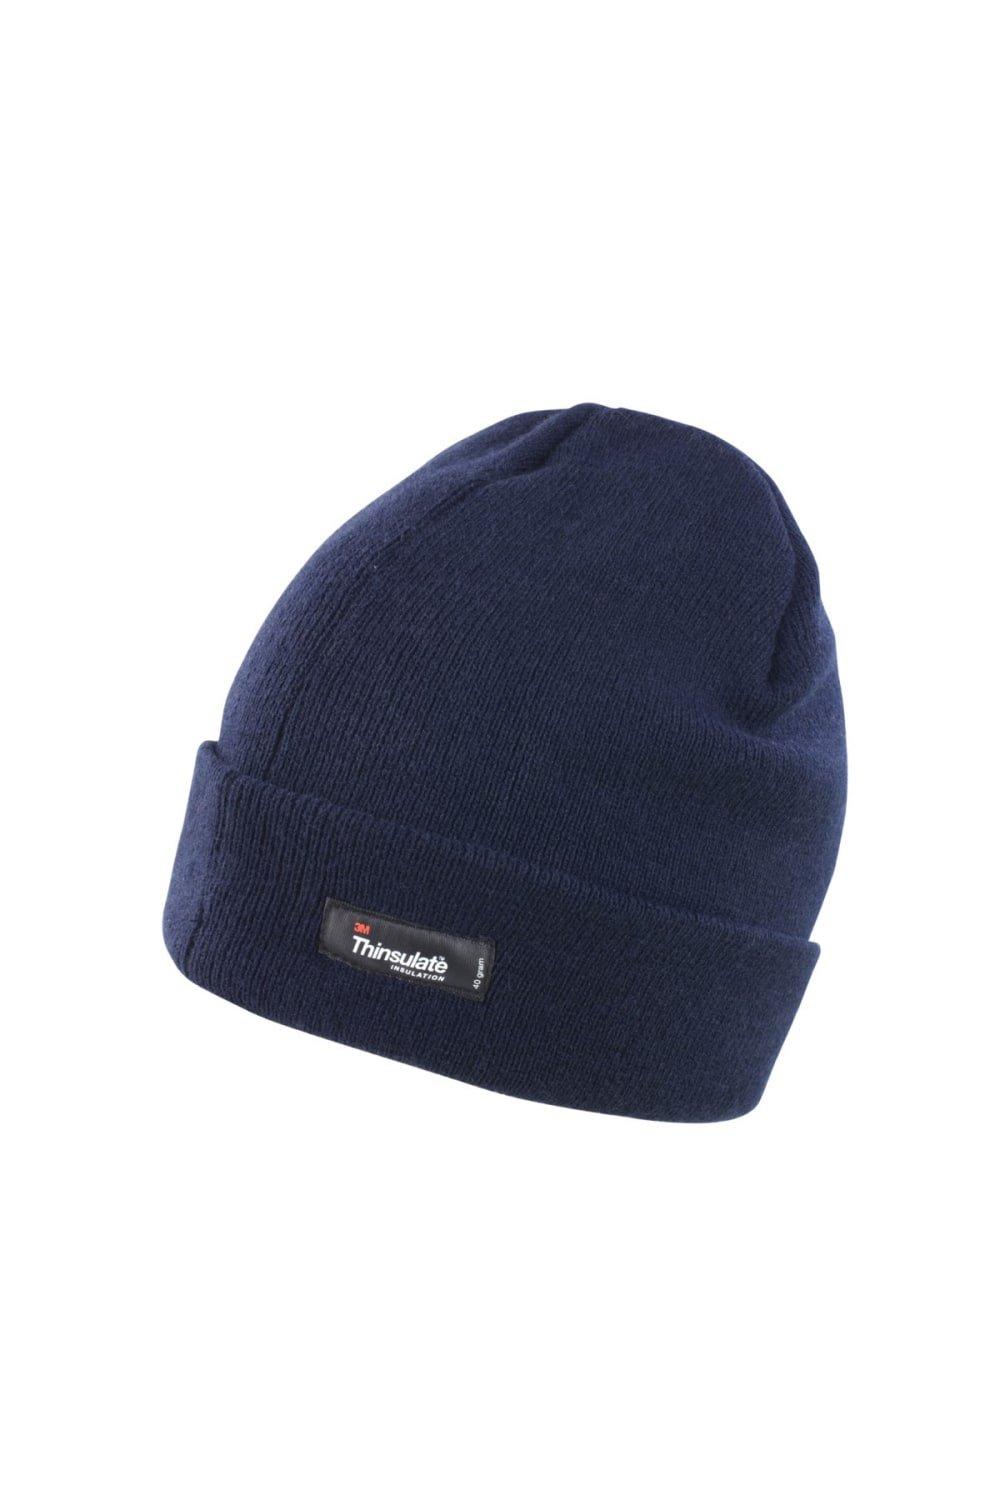 Легкая термозимняя шапка Thinsulate (3M, 40 г) Result, темно-синий фото